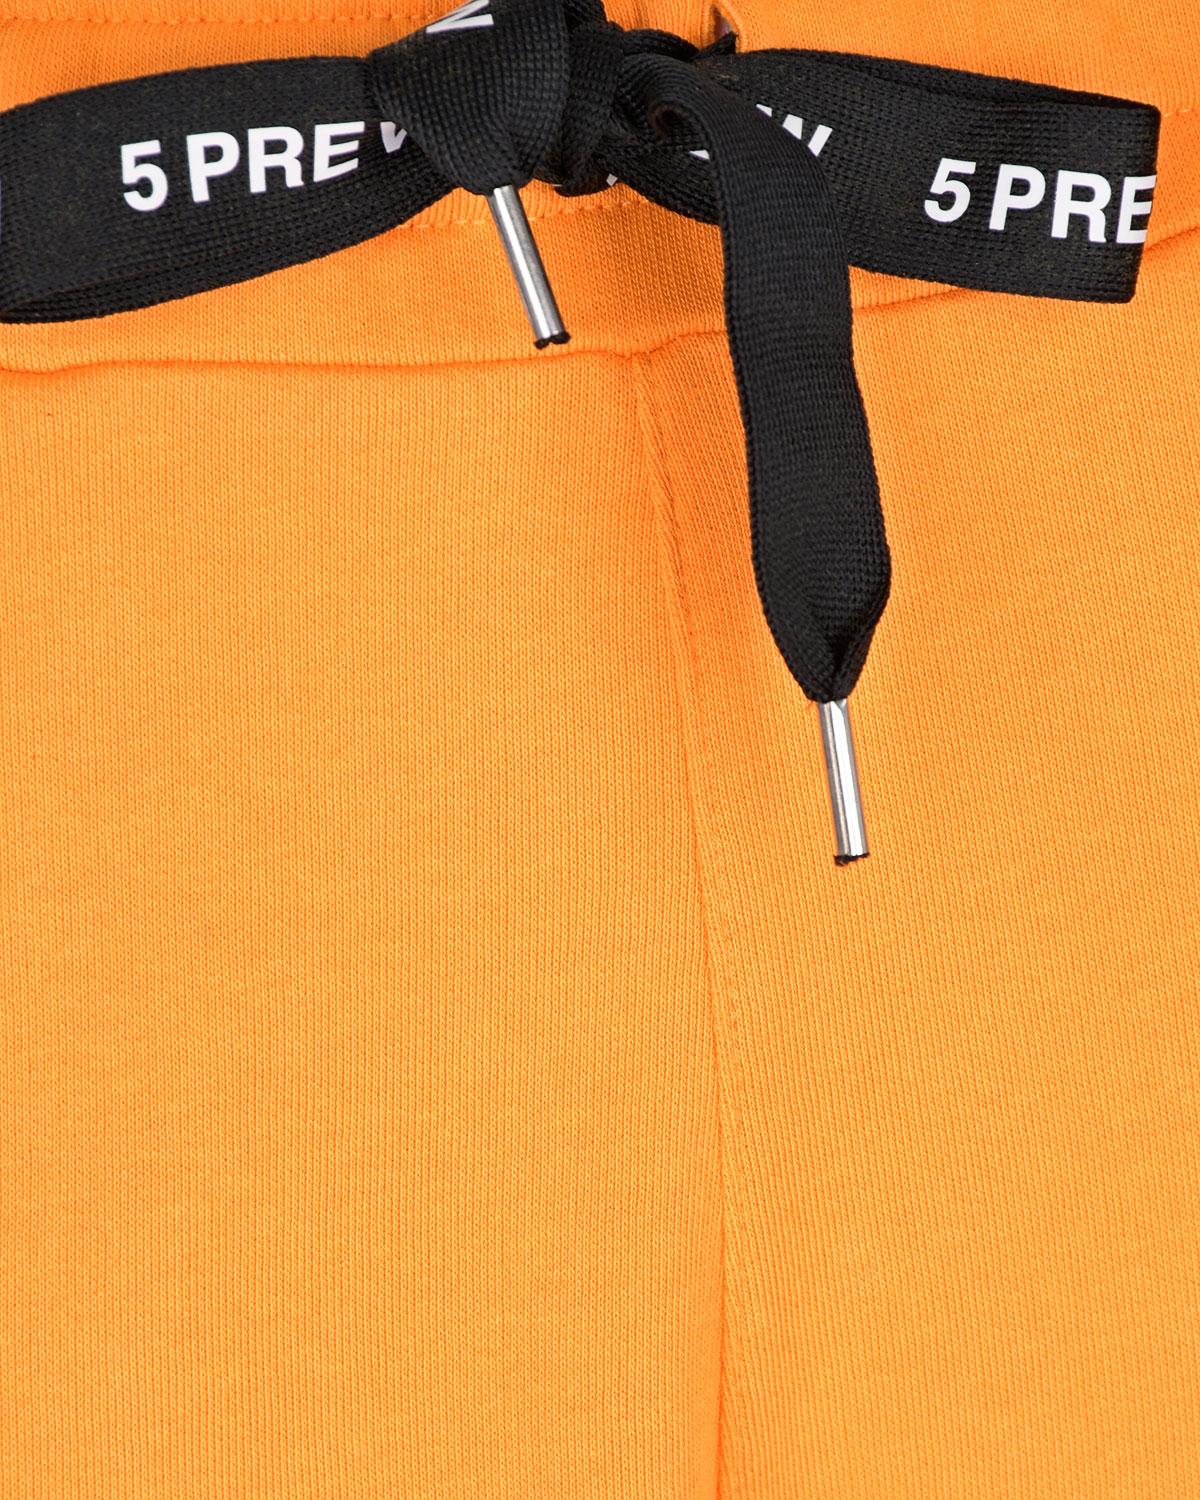 Оранжевые джоггеры с лампасами 5 Preview, размер 40, цвет оранжевый - фото 9